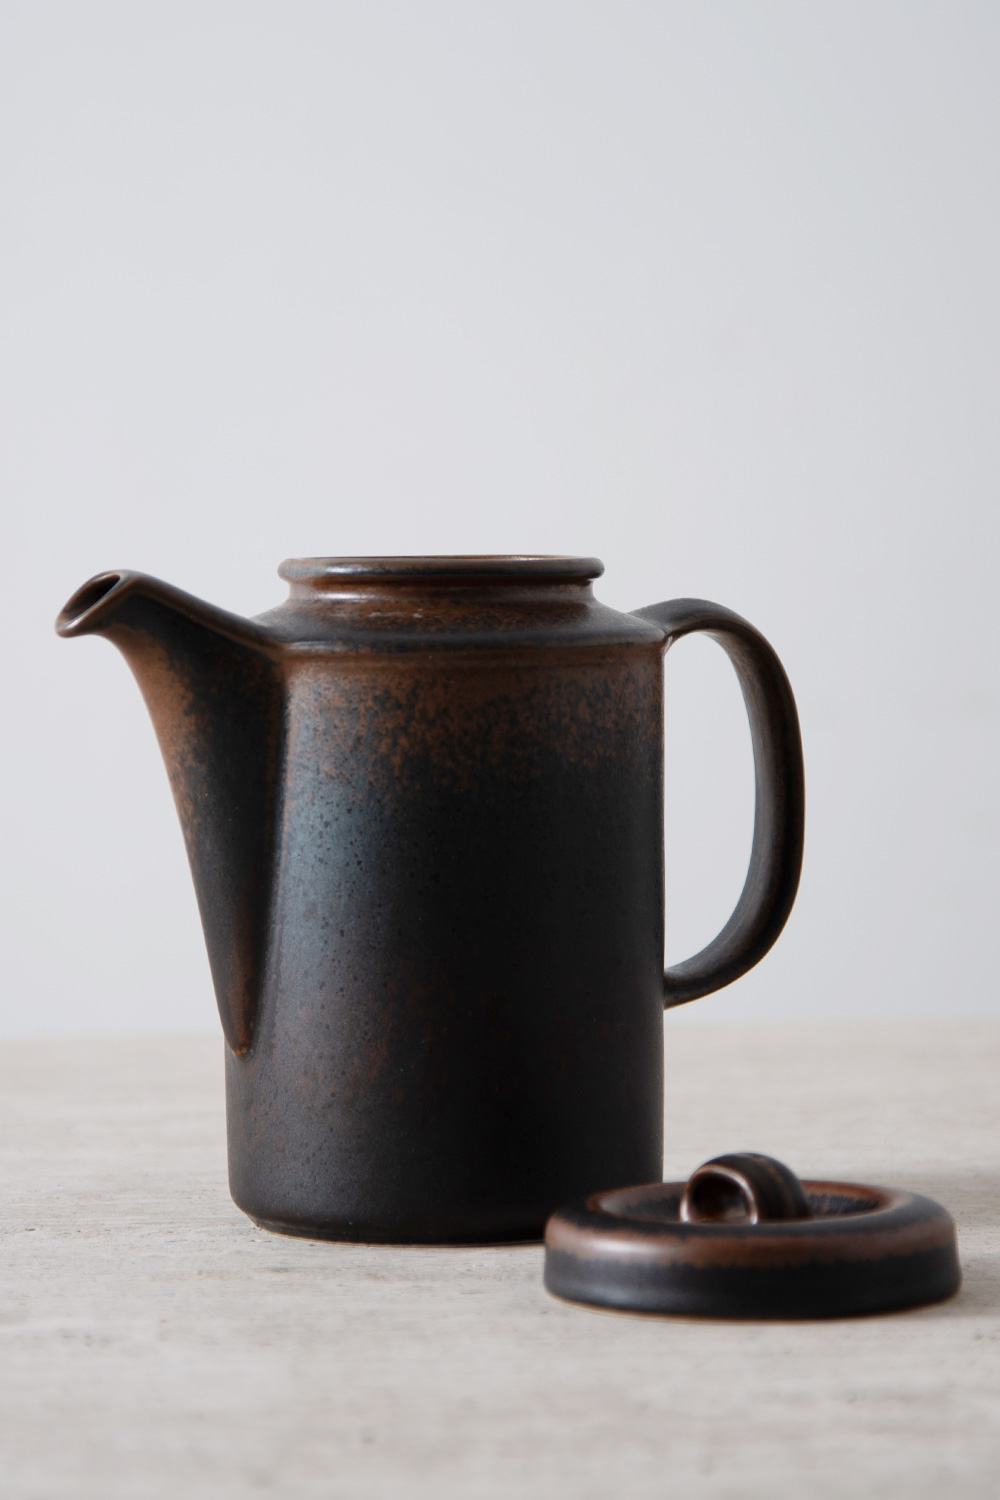 Coffee Pot “Ruska” for ARABIA by Ulla Procope